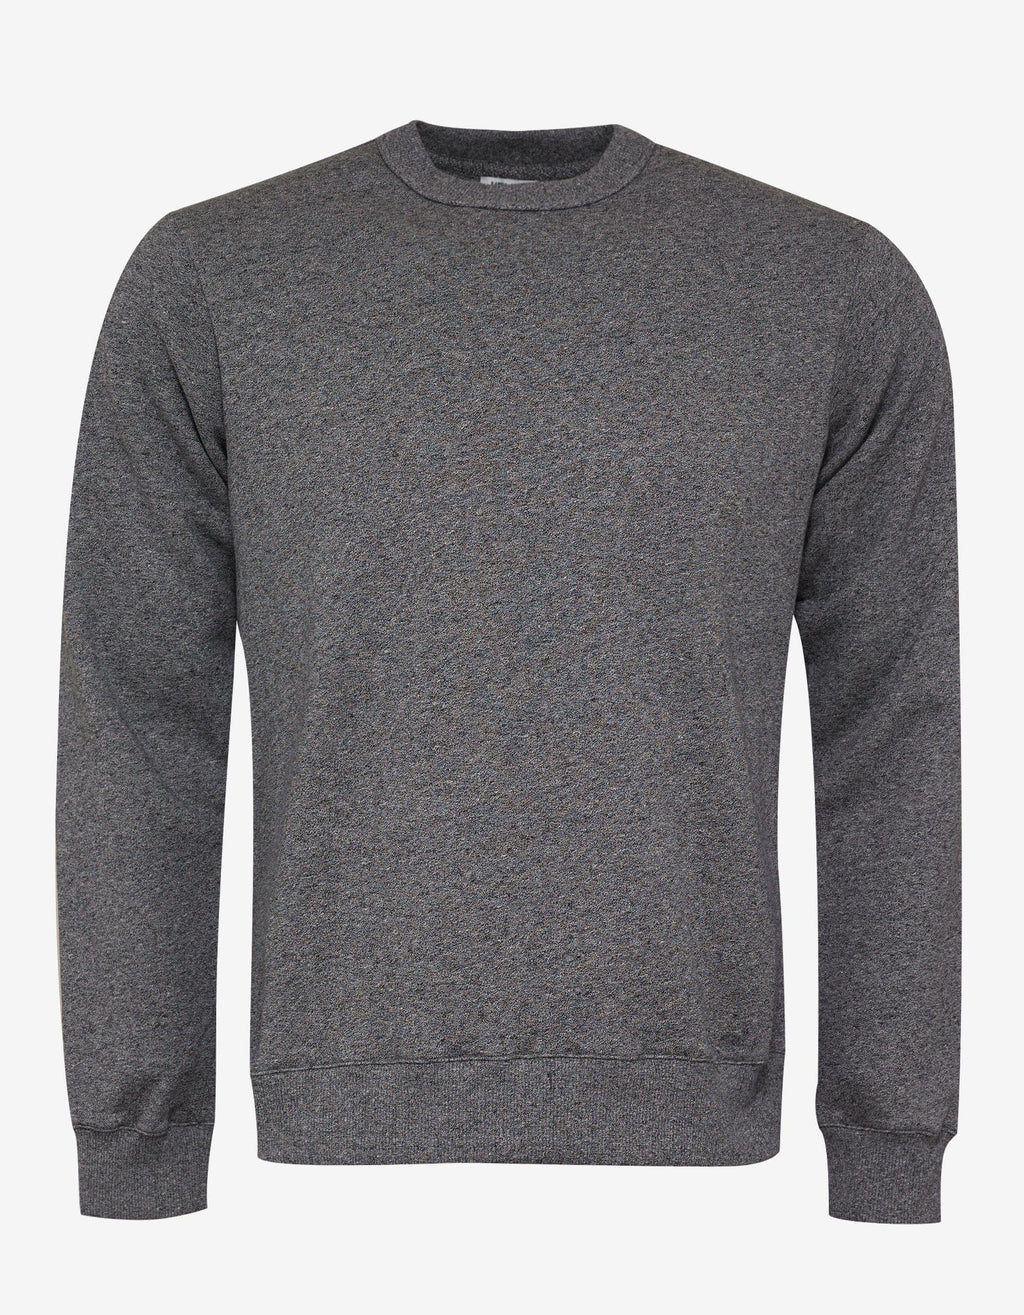 Kenzo Kenzo Grey Rear Logo Print Sweatshirt